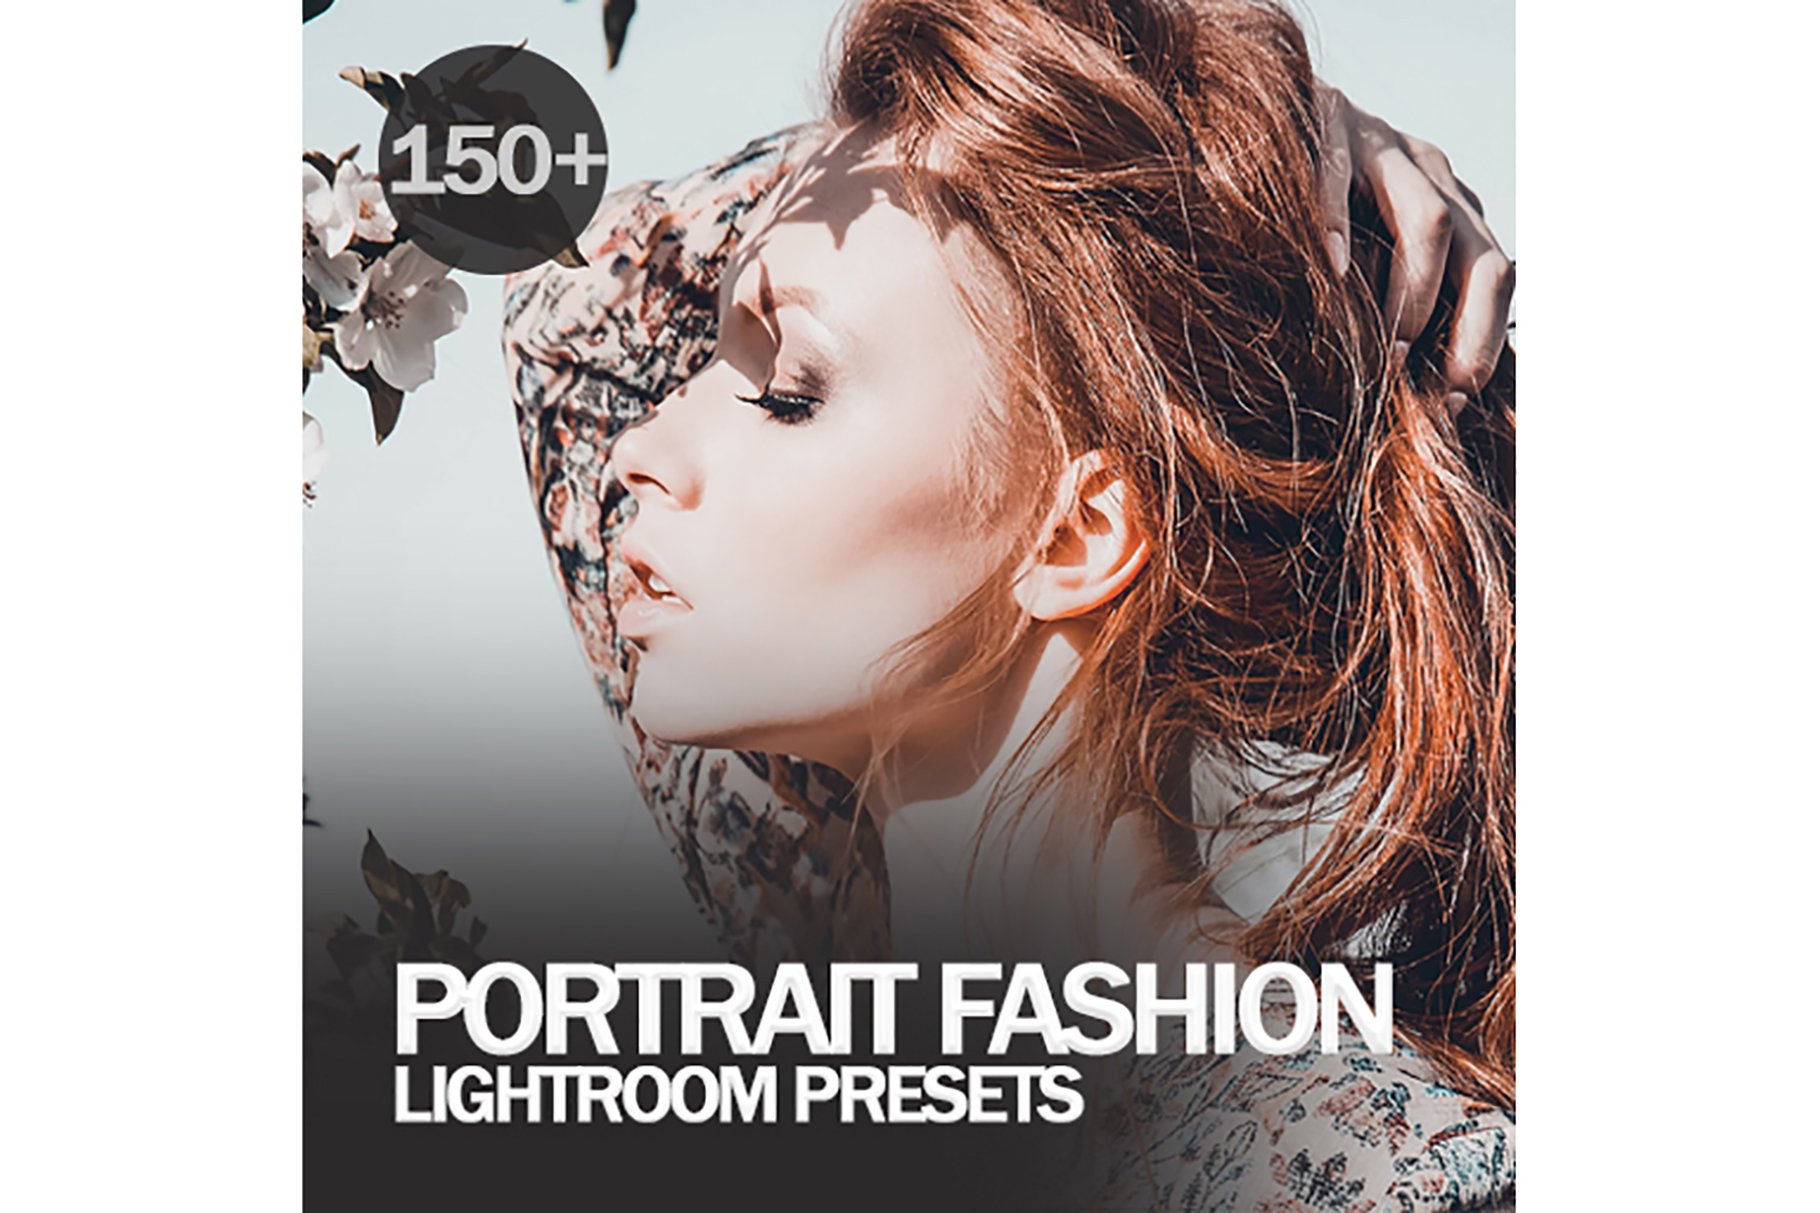 Portrait Fashion Lightroom Presetscover image.